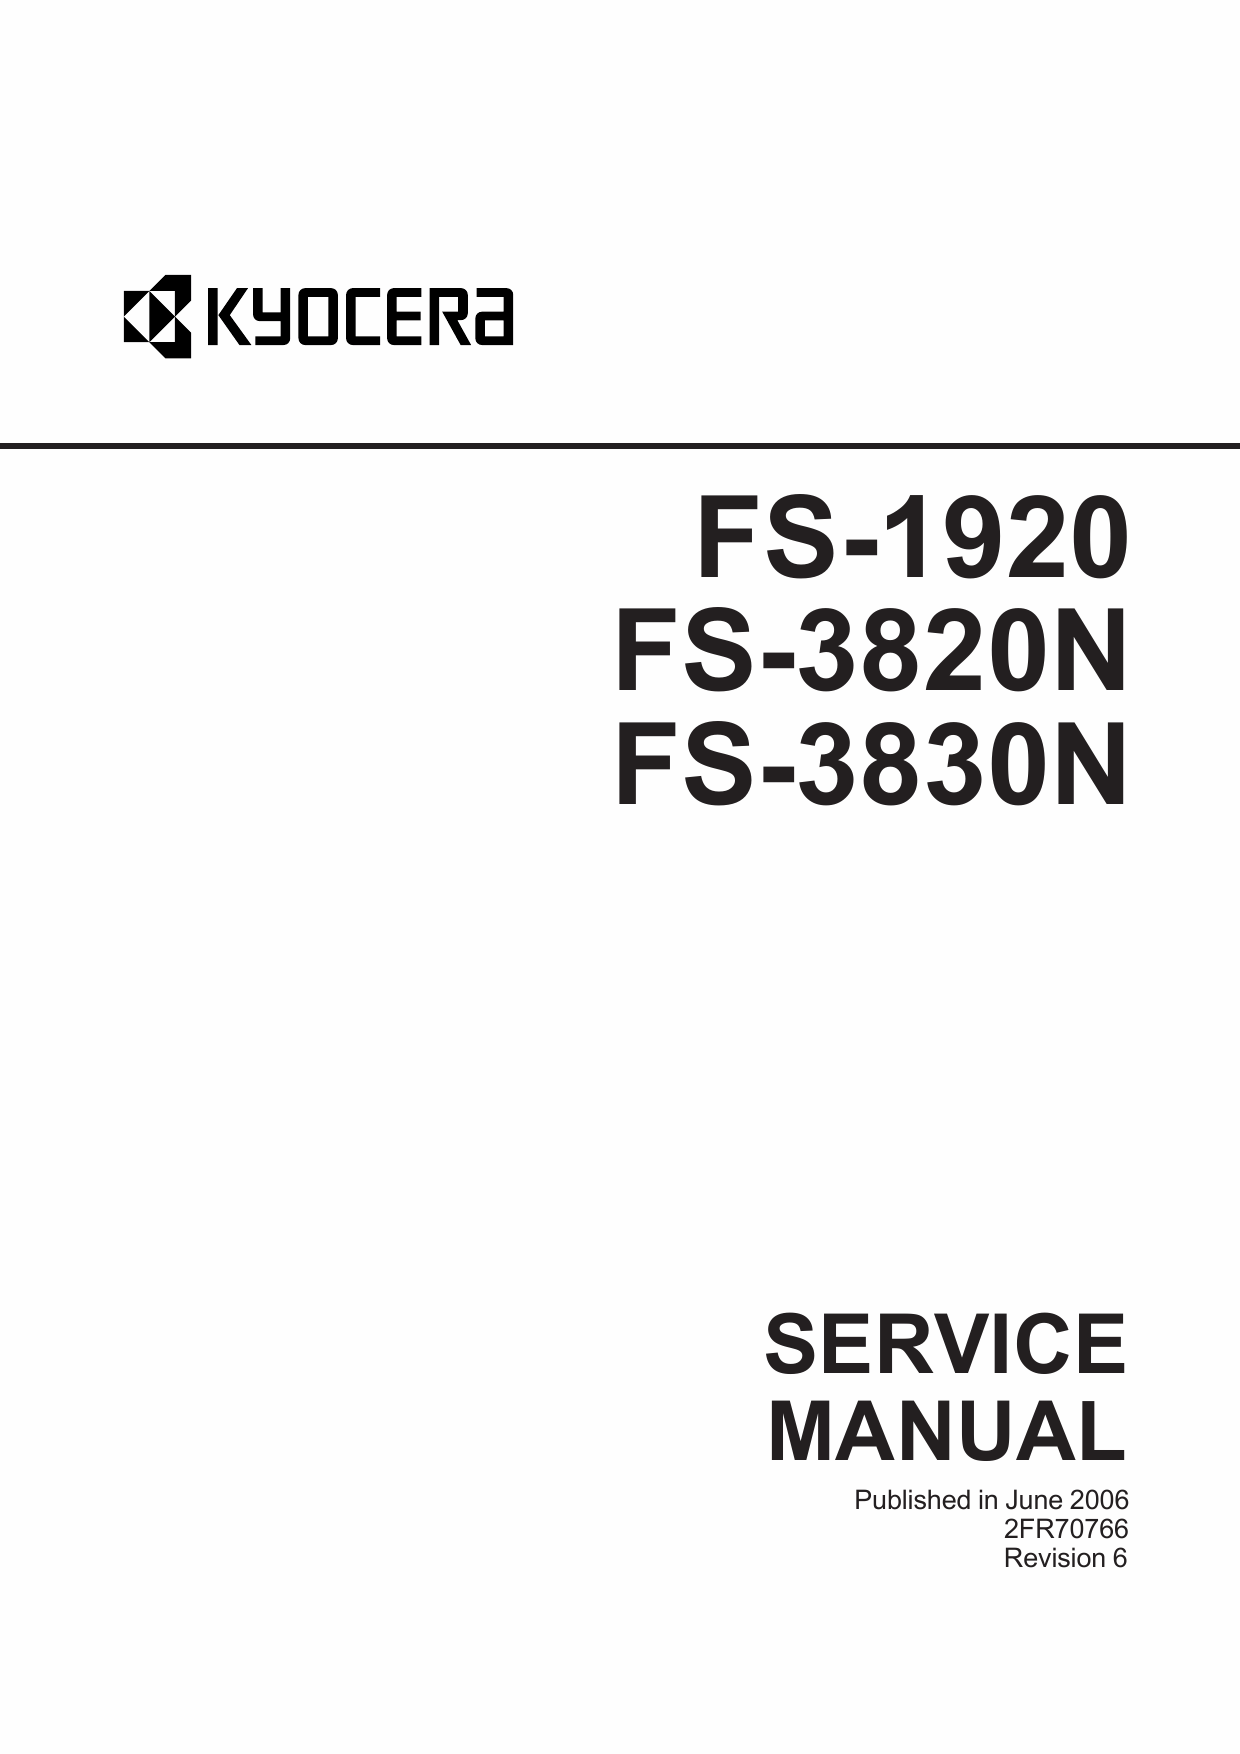 Kyocera service manual. Принтер Kyocera 1920. Kyocera 3820. Принтер Kyocera FS-3820n. Принтер Kyocera FS-3830n.